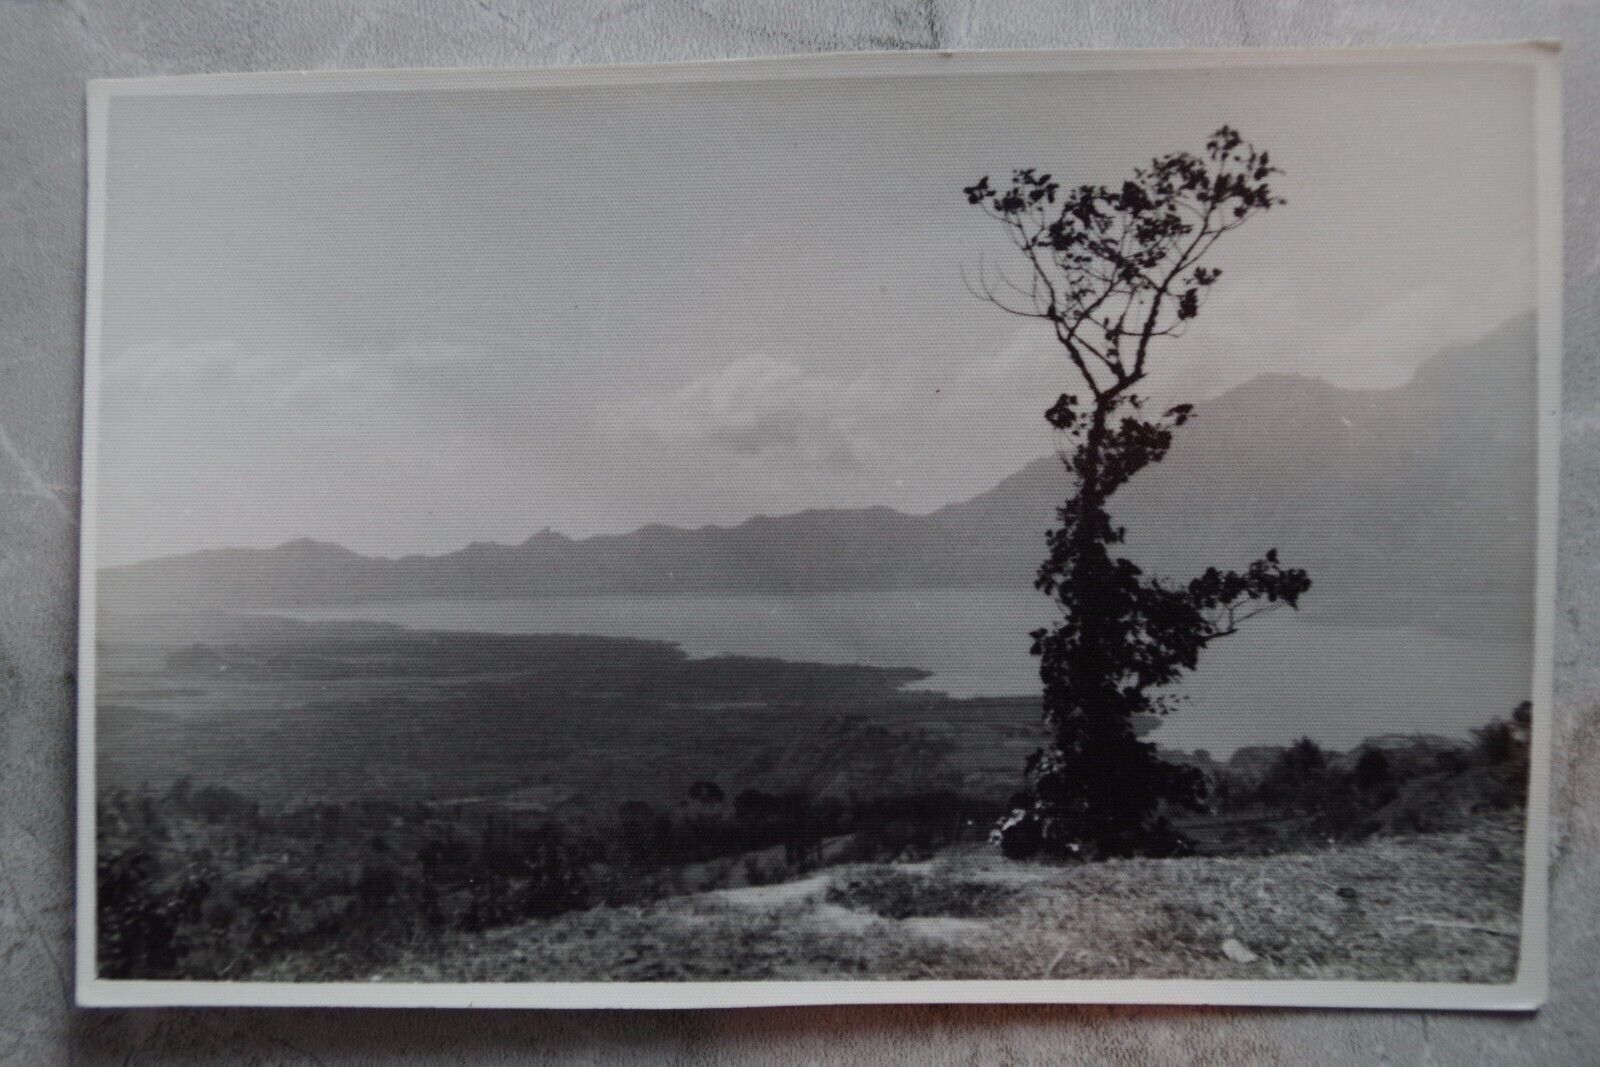 Vintage Indonesian Postcard Kartupos s: Scenic View of Mountains & Lake